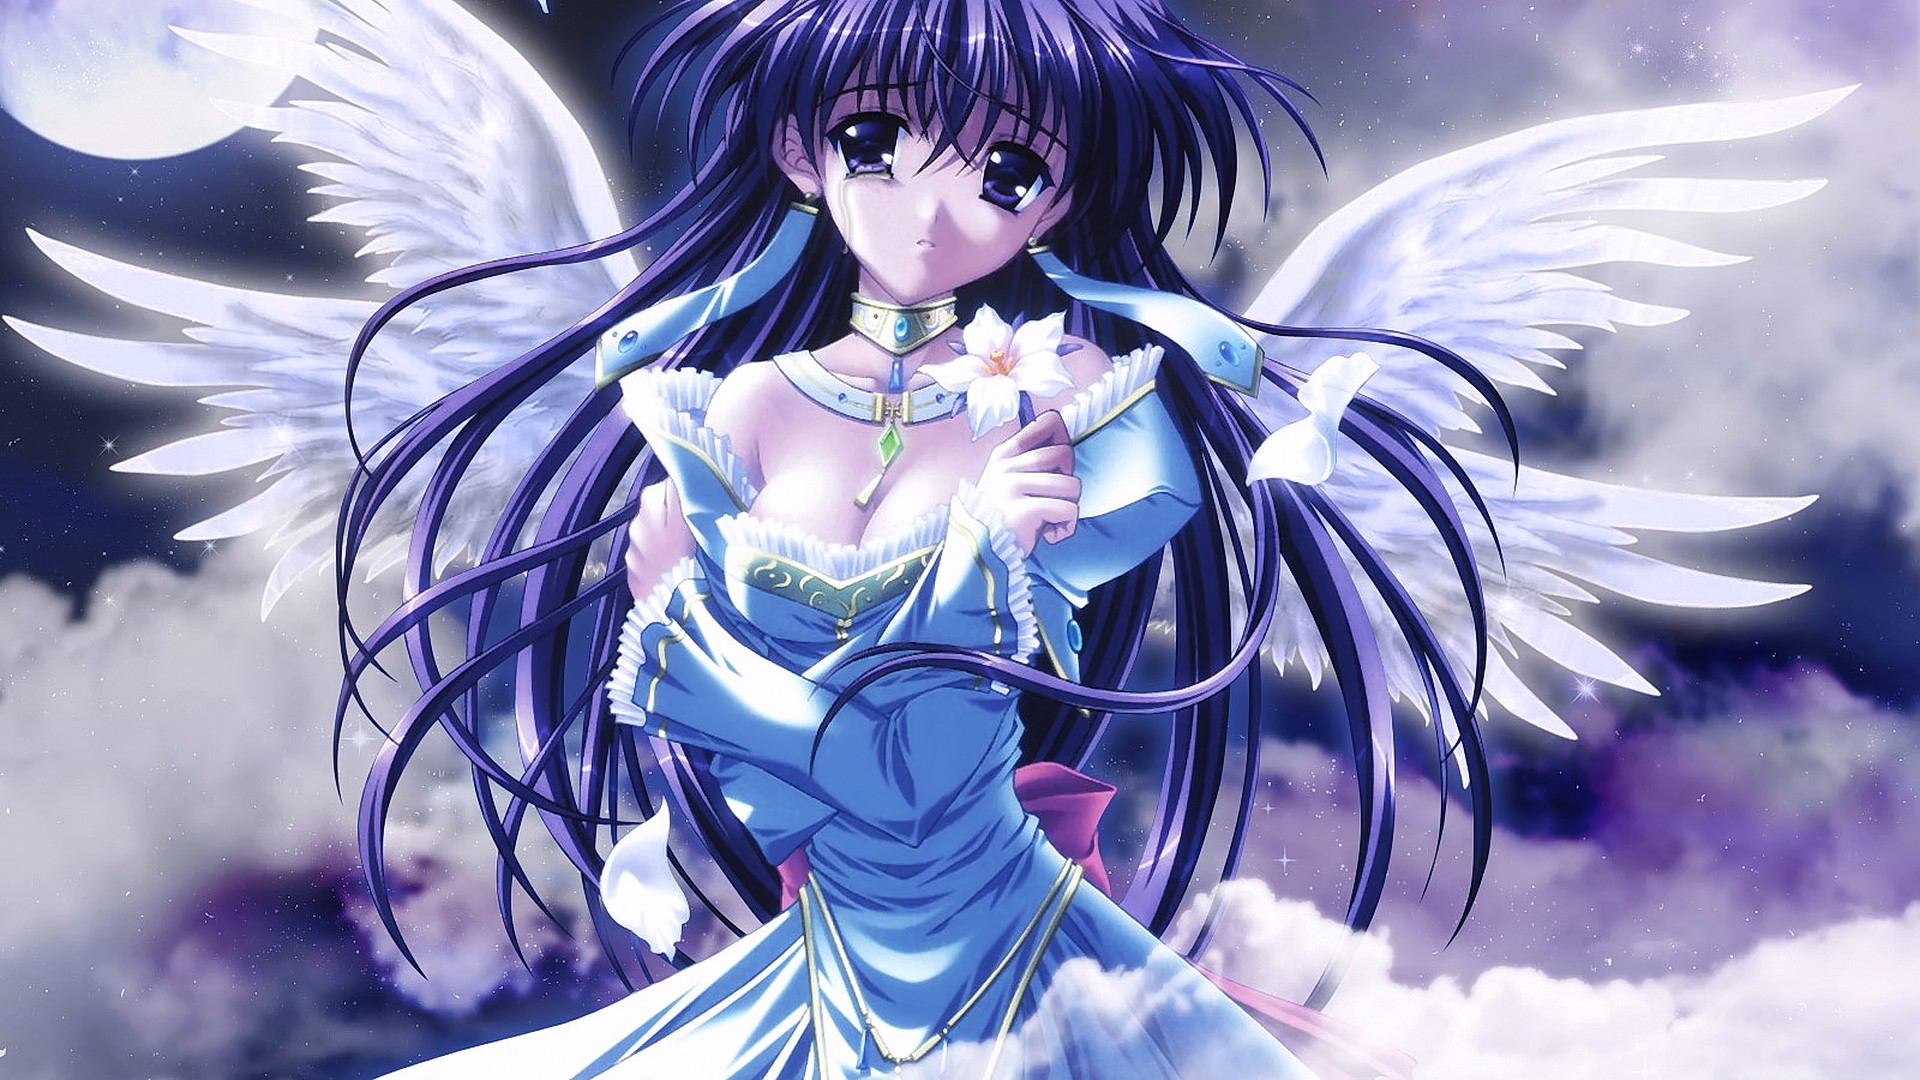 Anime 1920x1080 anime anime girls wings long hair dress arms crossed Moon flowers fantasy art fantasy girl